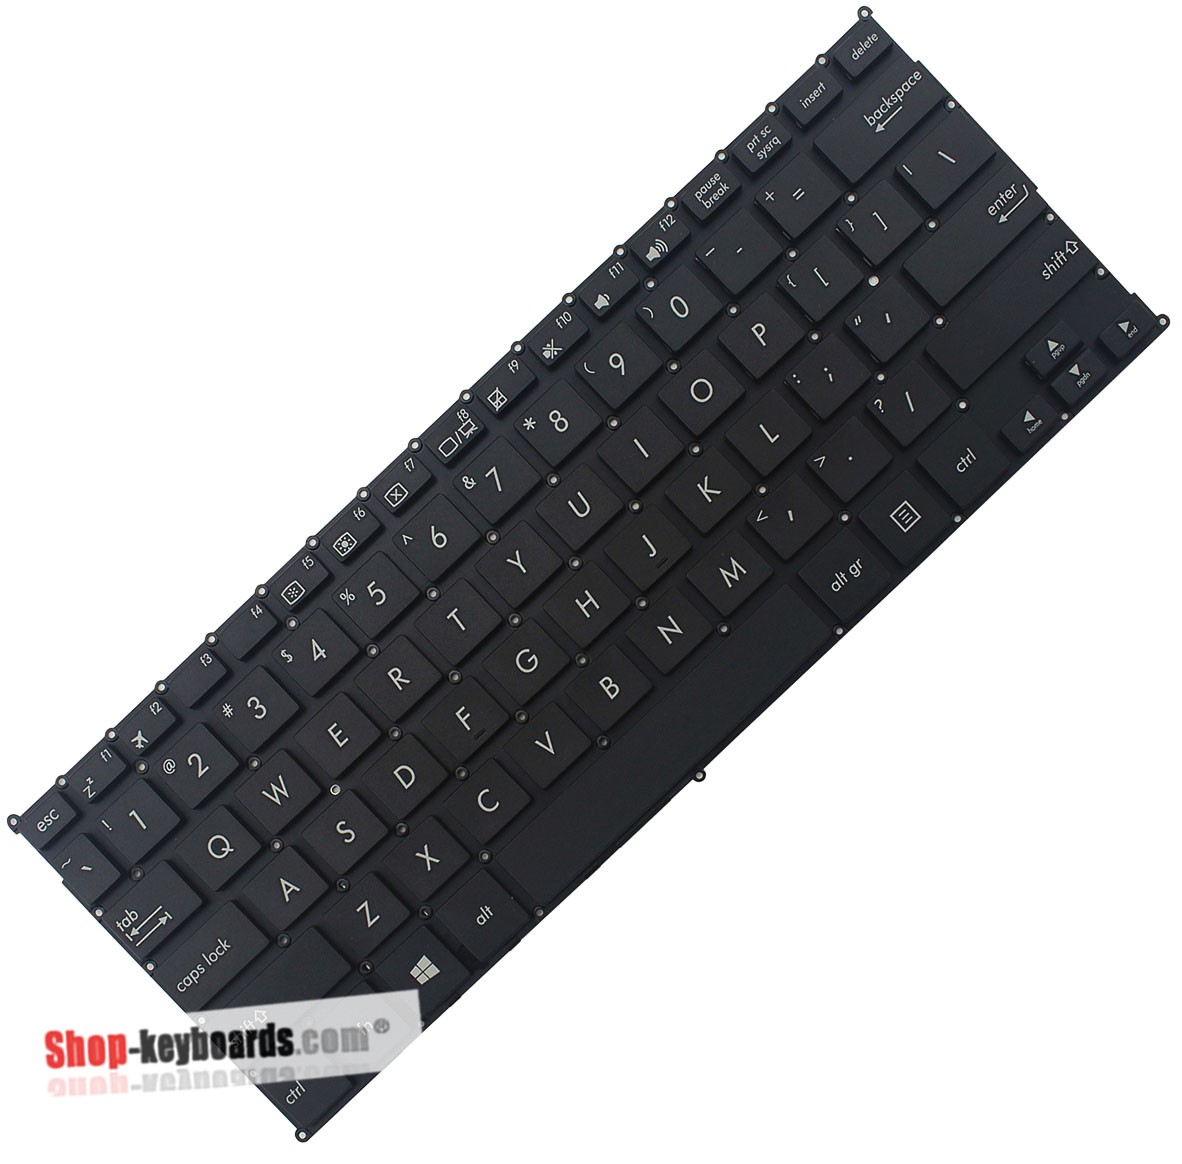 Asus AEEX2U00020 Keyboard replacement